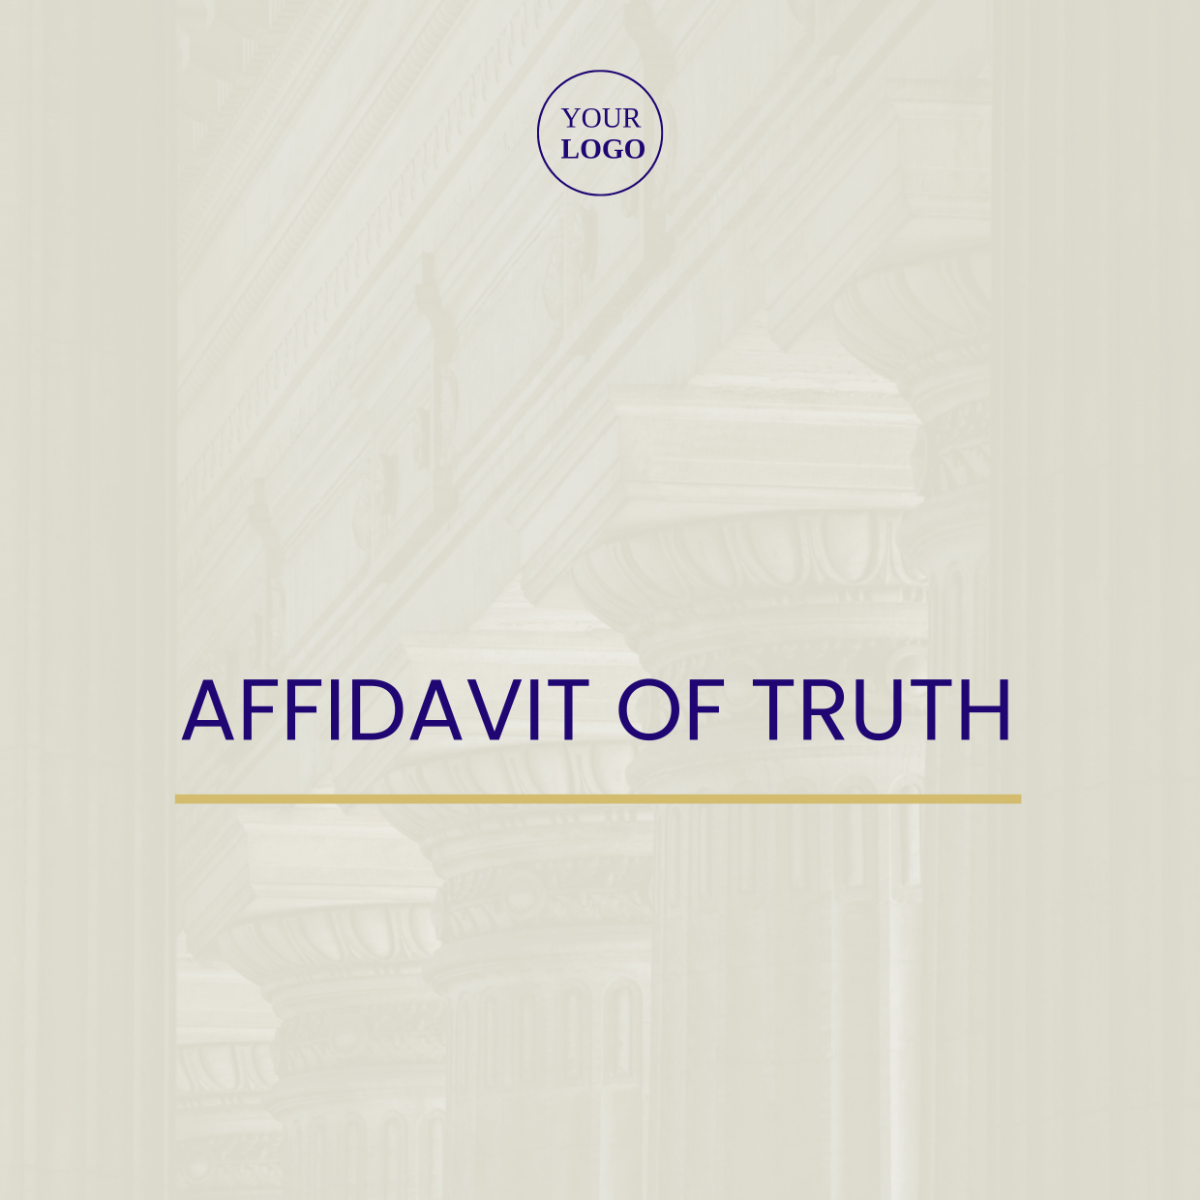 Affidavit of Truth Template